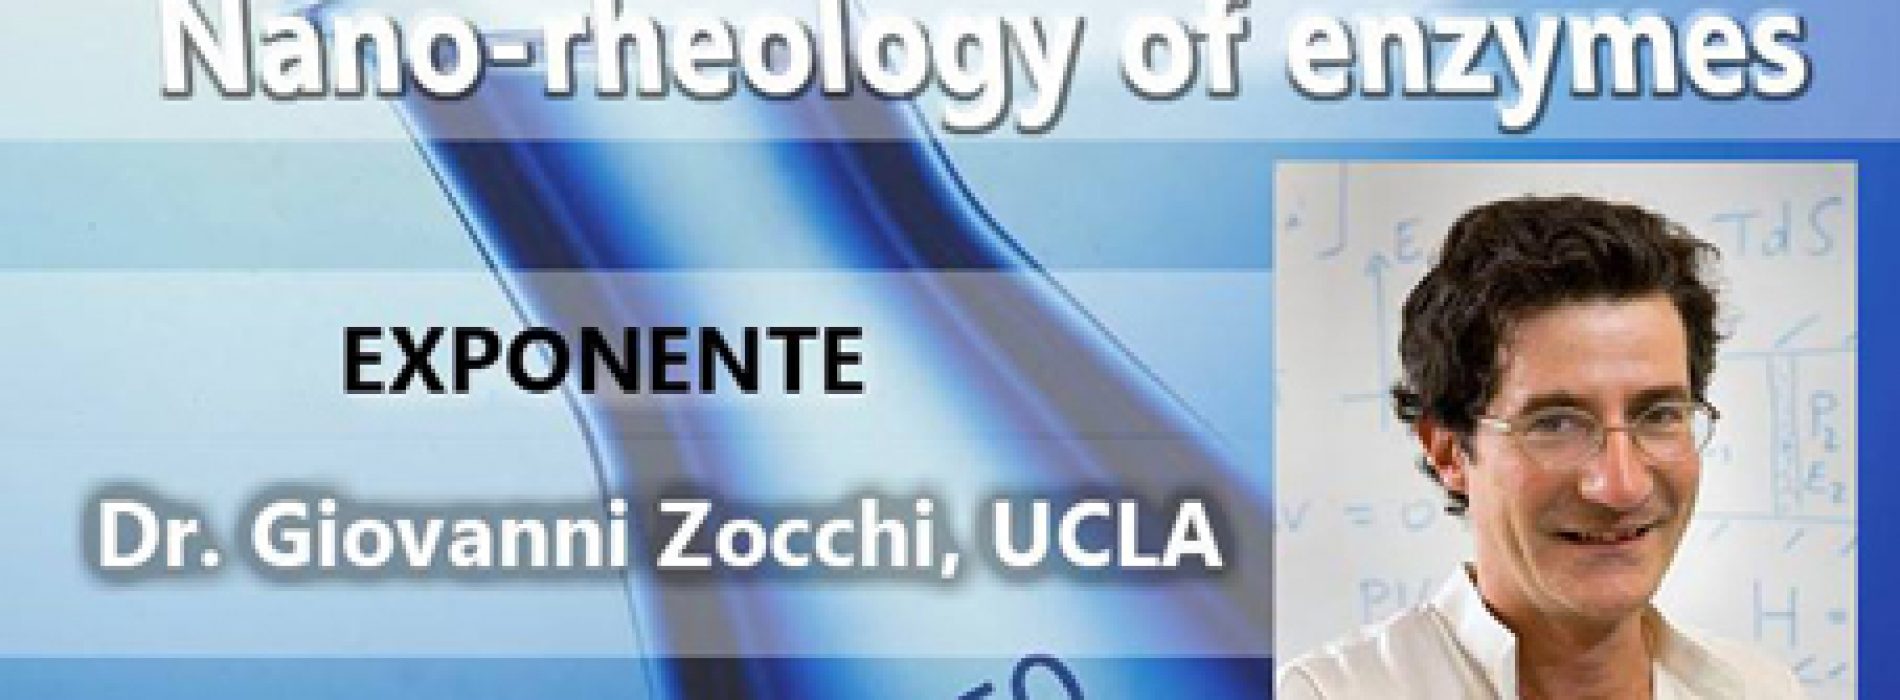 Charla Nano-rheology of enzymes, Dr. Giovanni Zocchi